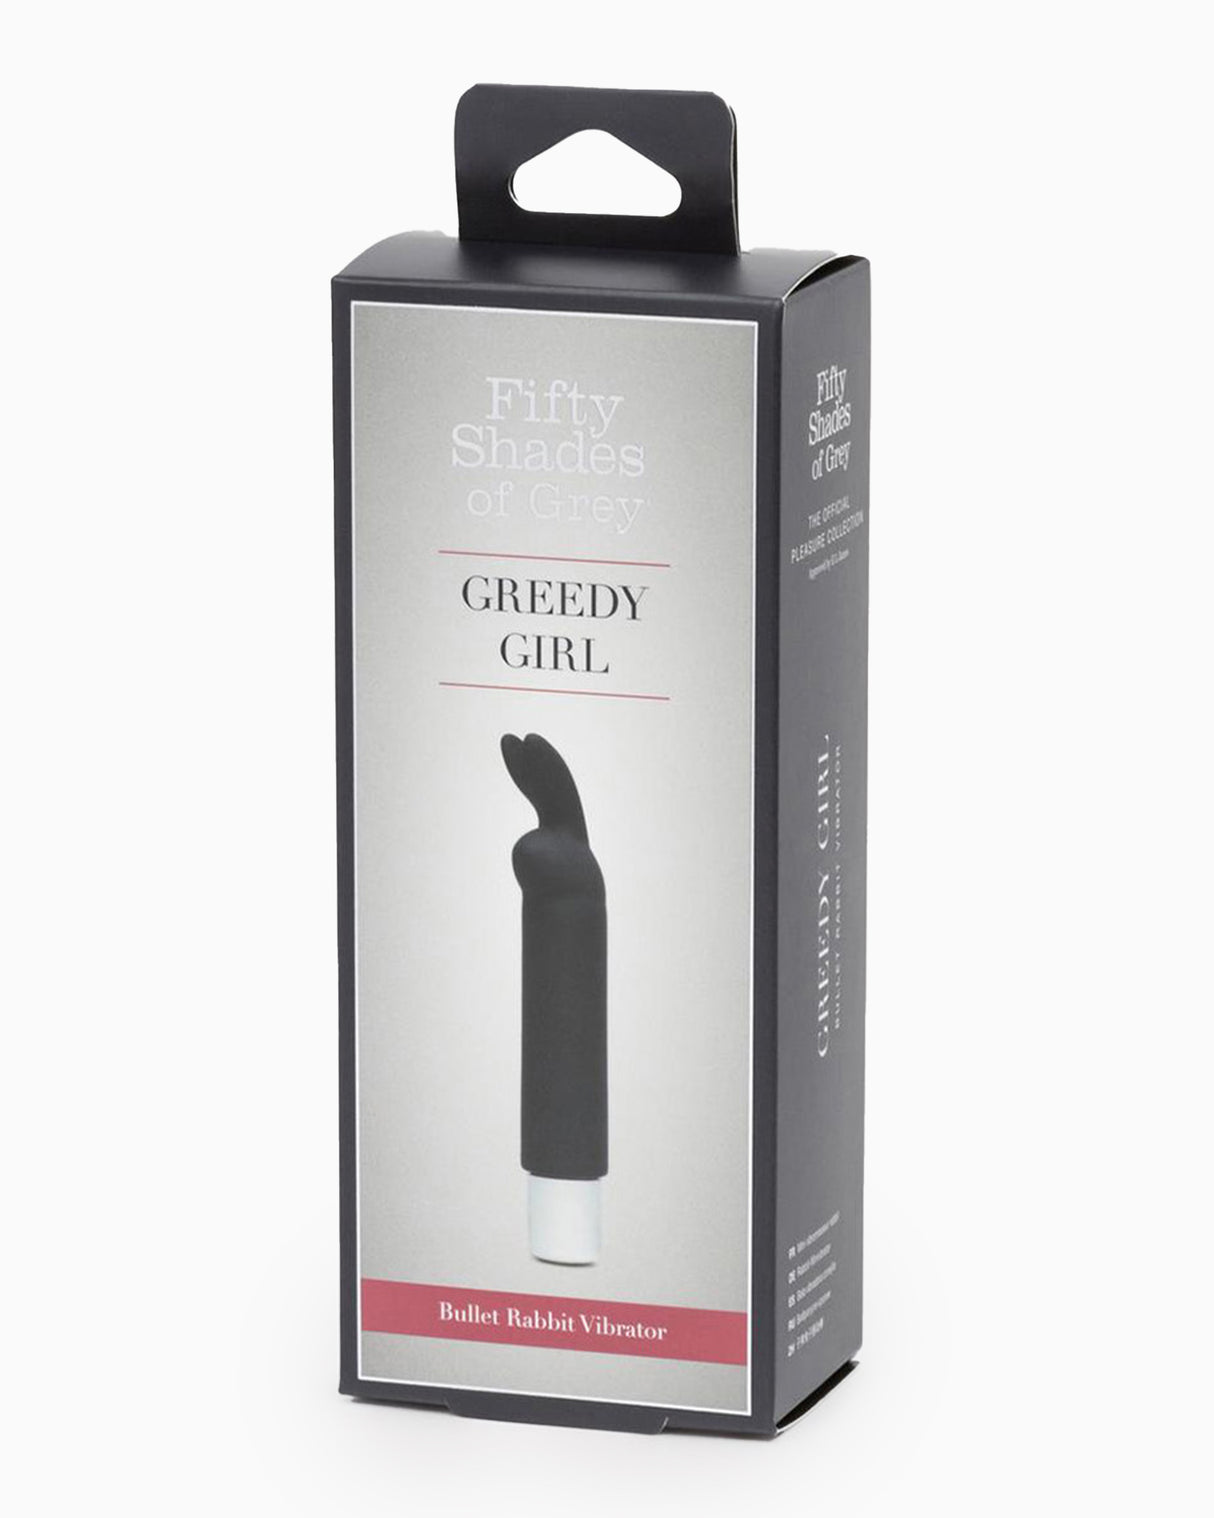 Fifty Shades of Grey Greedy Girl Bullet Rabbit Vibrator